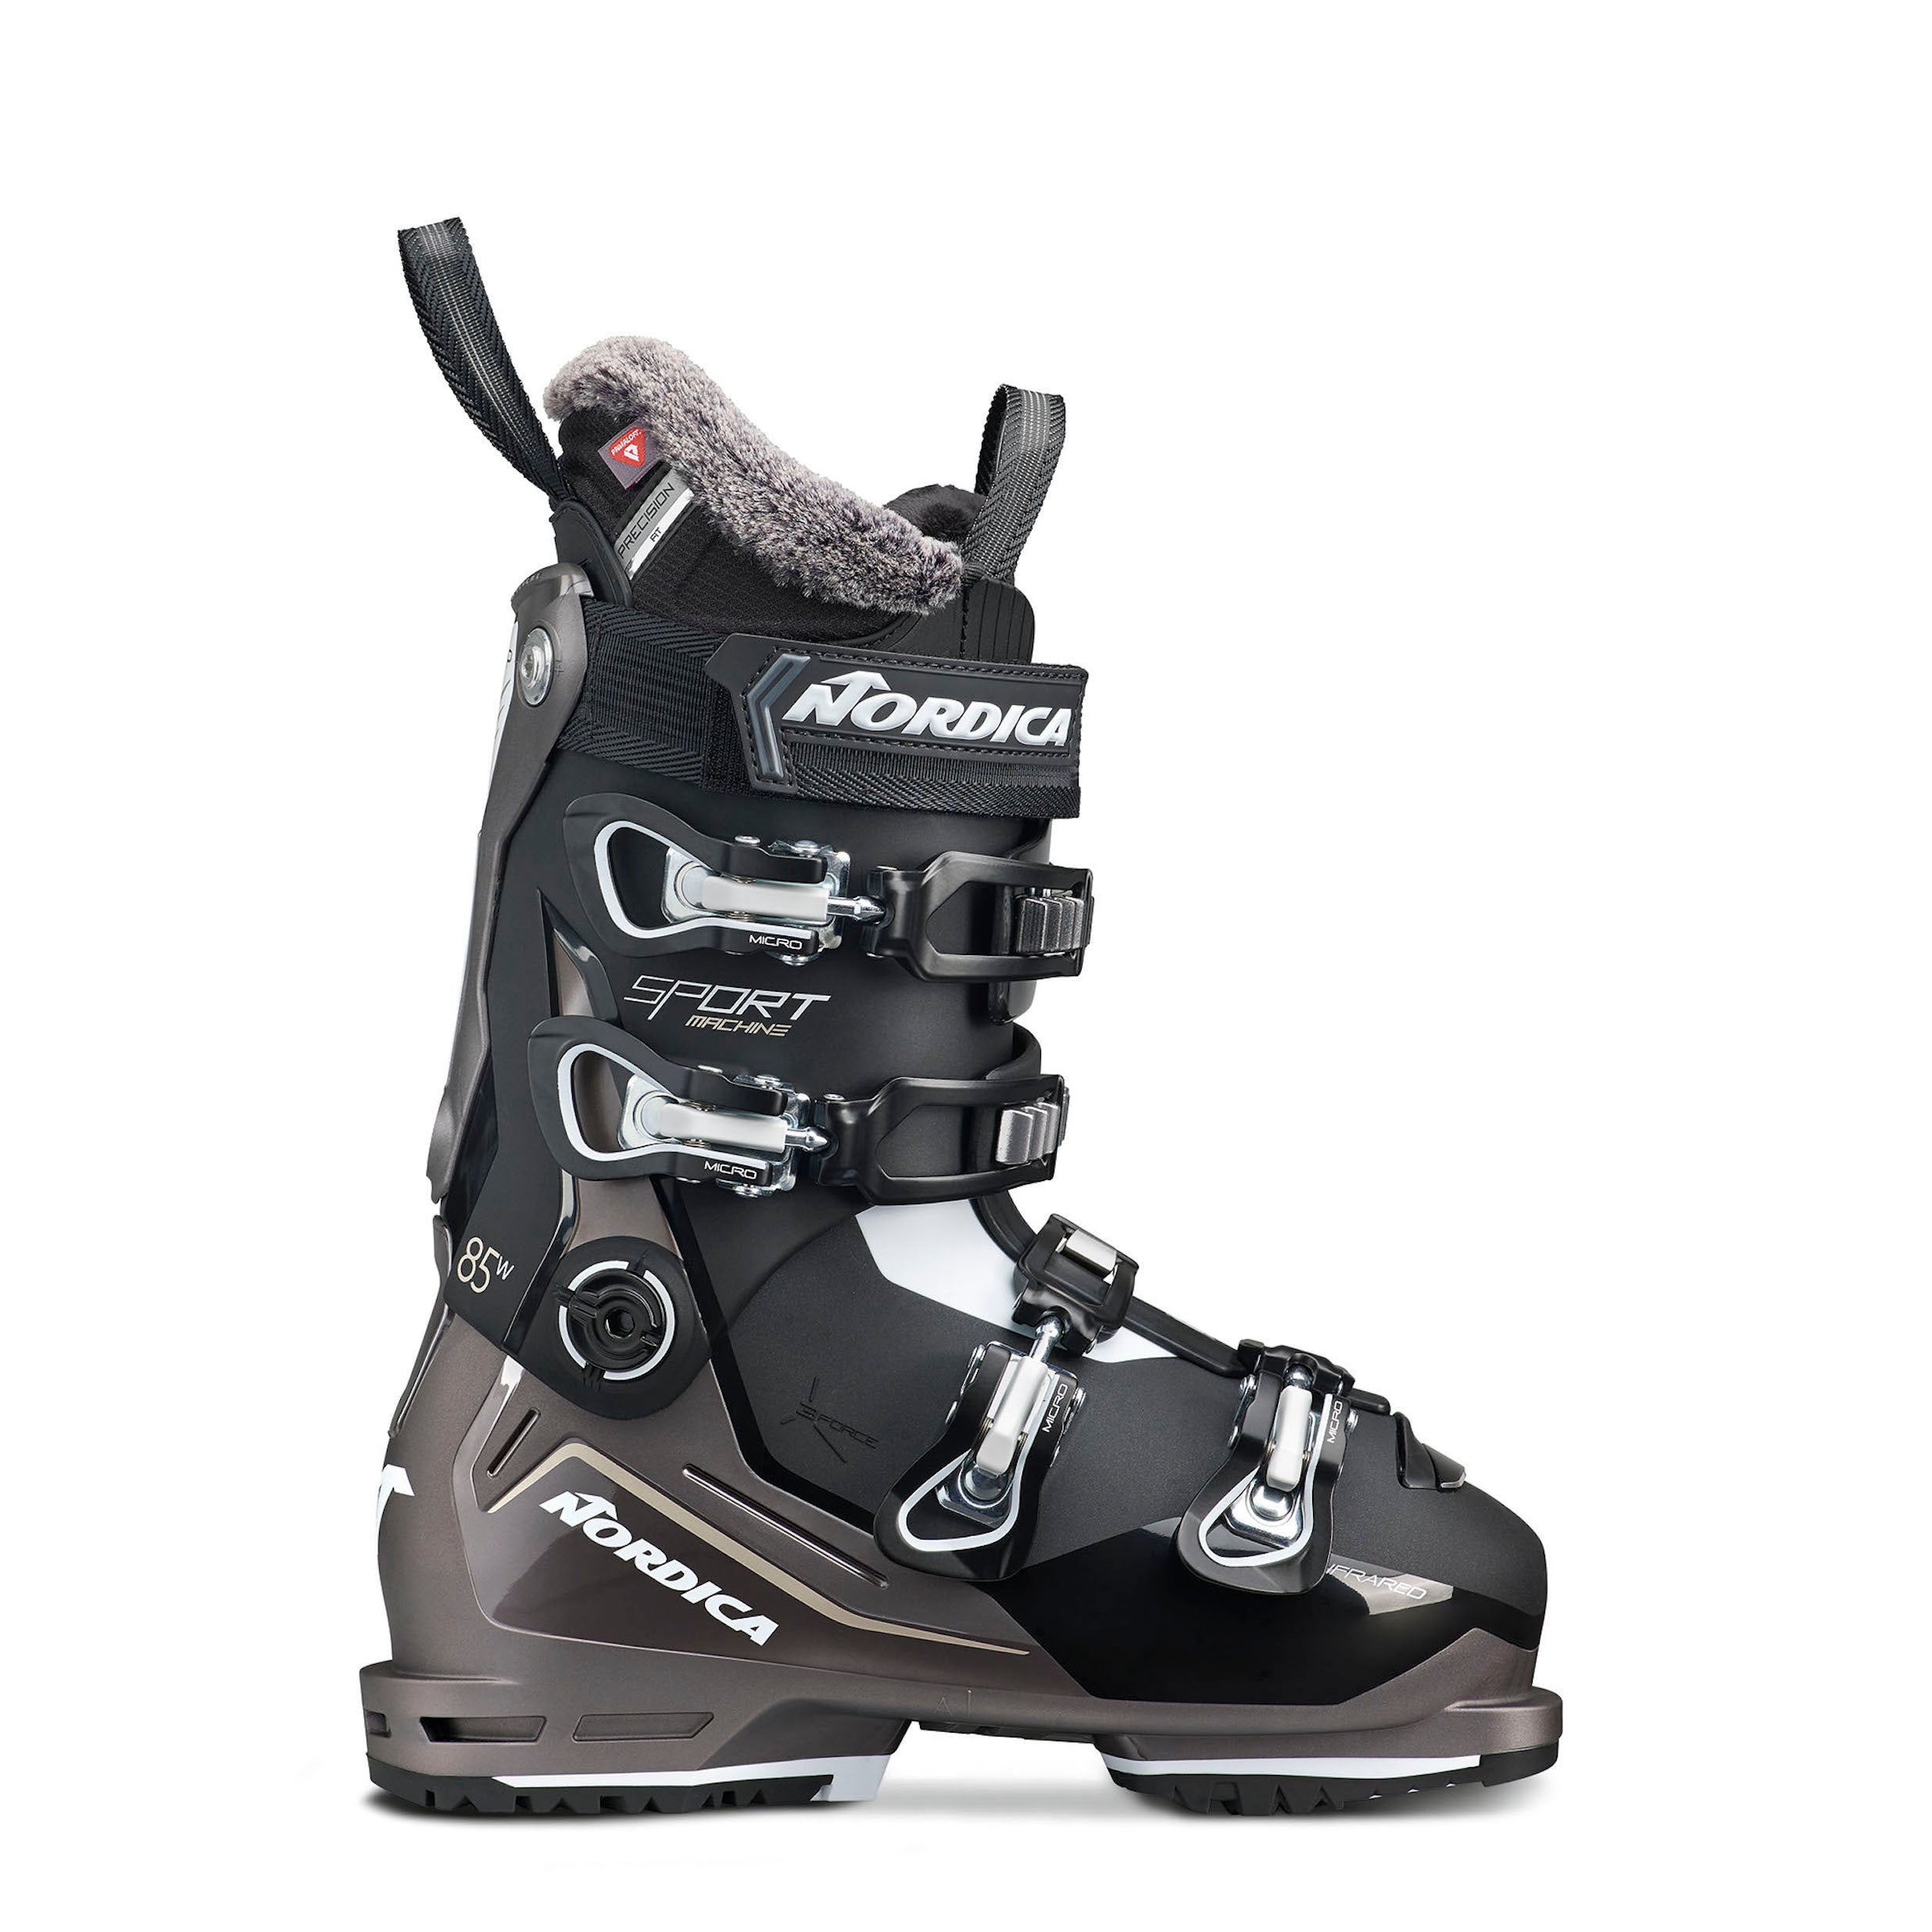 Women's Nordica Sportmachine 3 85 black and grey ski boot with silver accents.